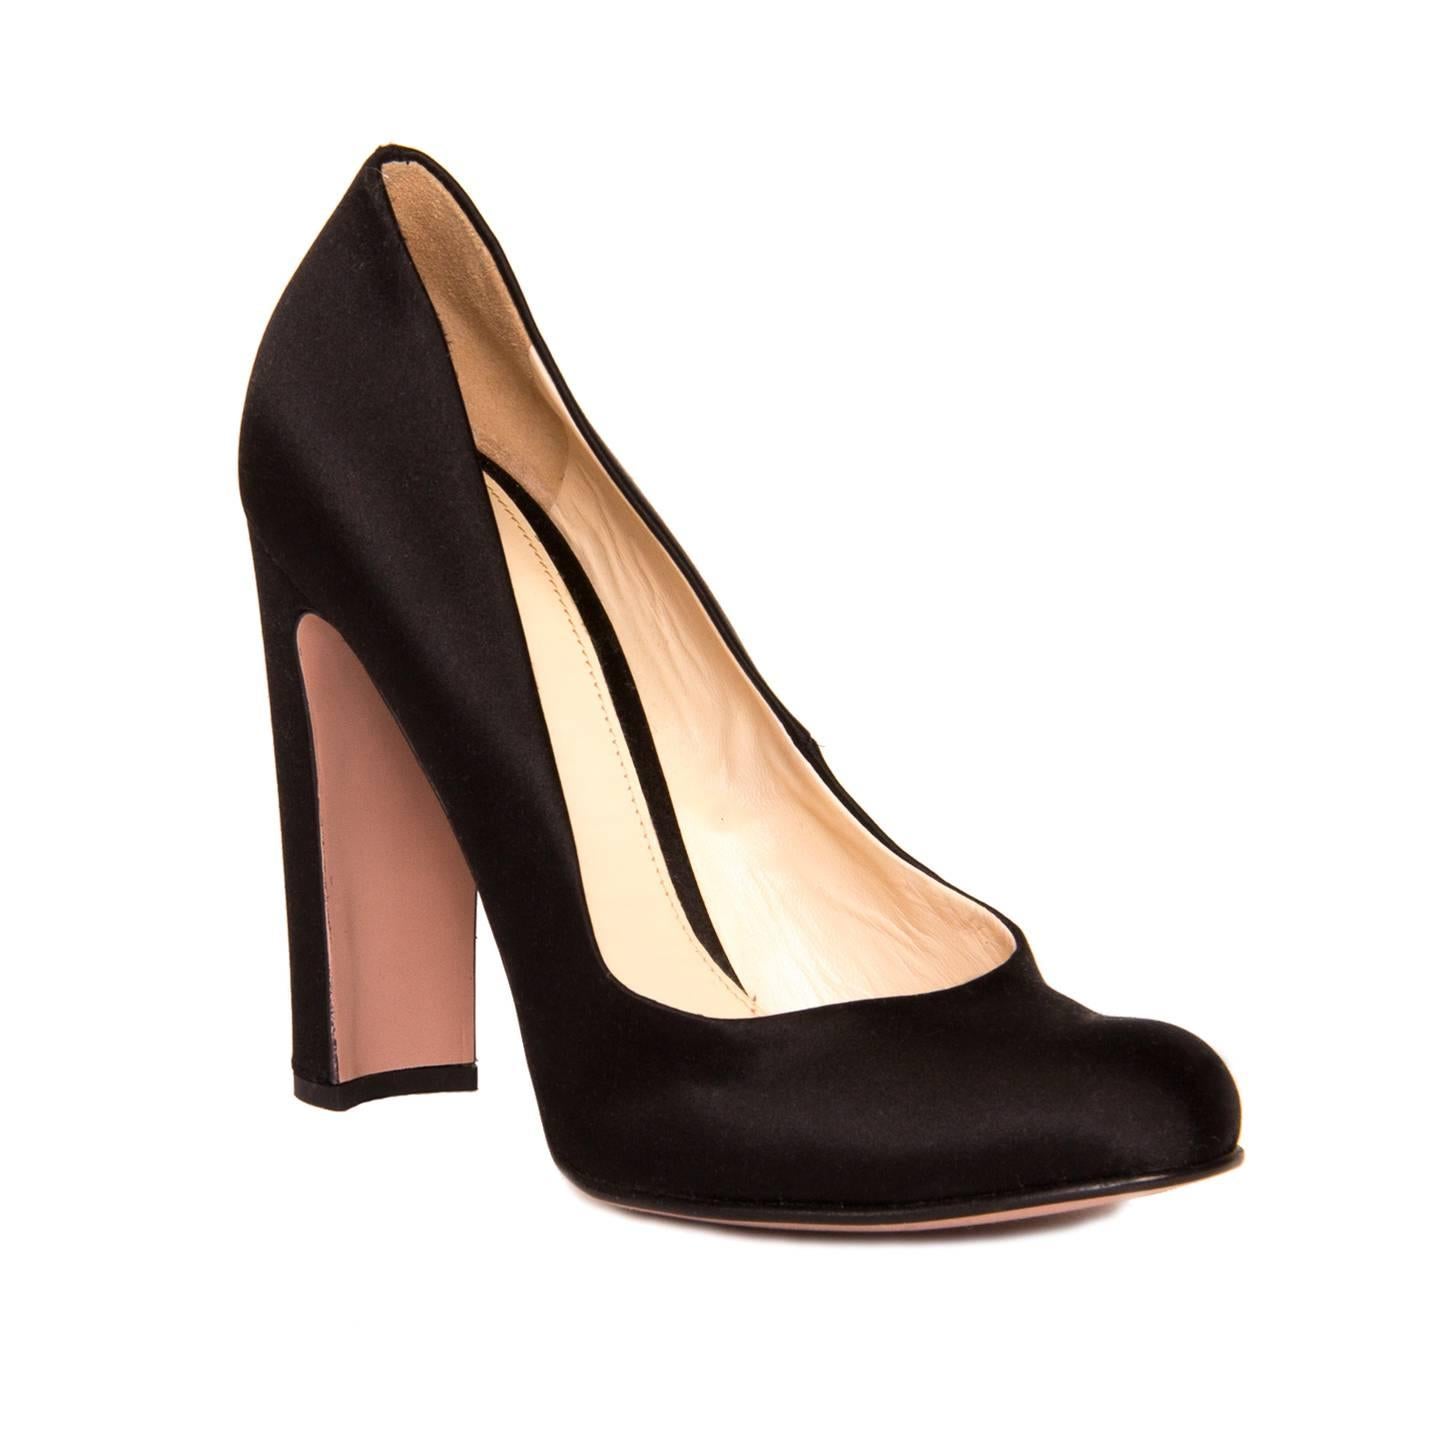 Prada Elegant black satin high chunky heel round toe pumps. Made in Italy. Heel 4.5